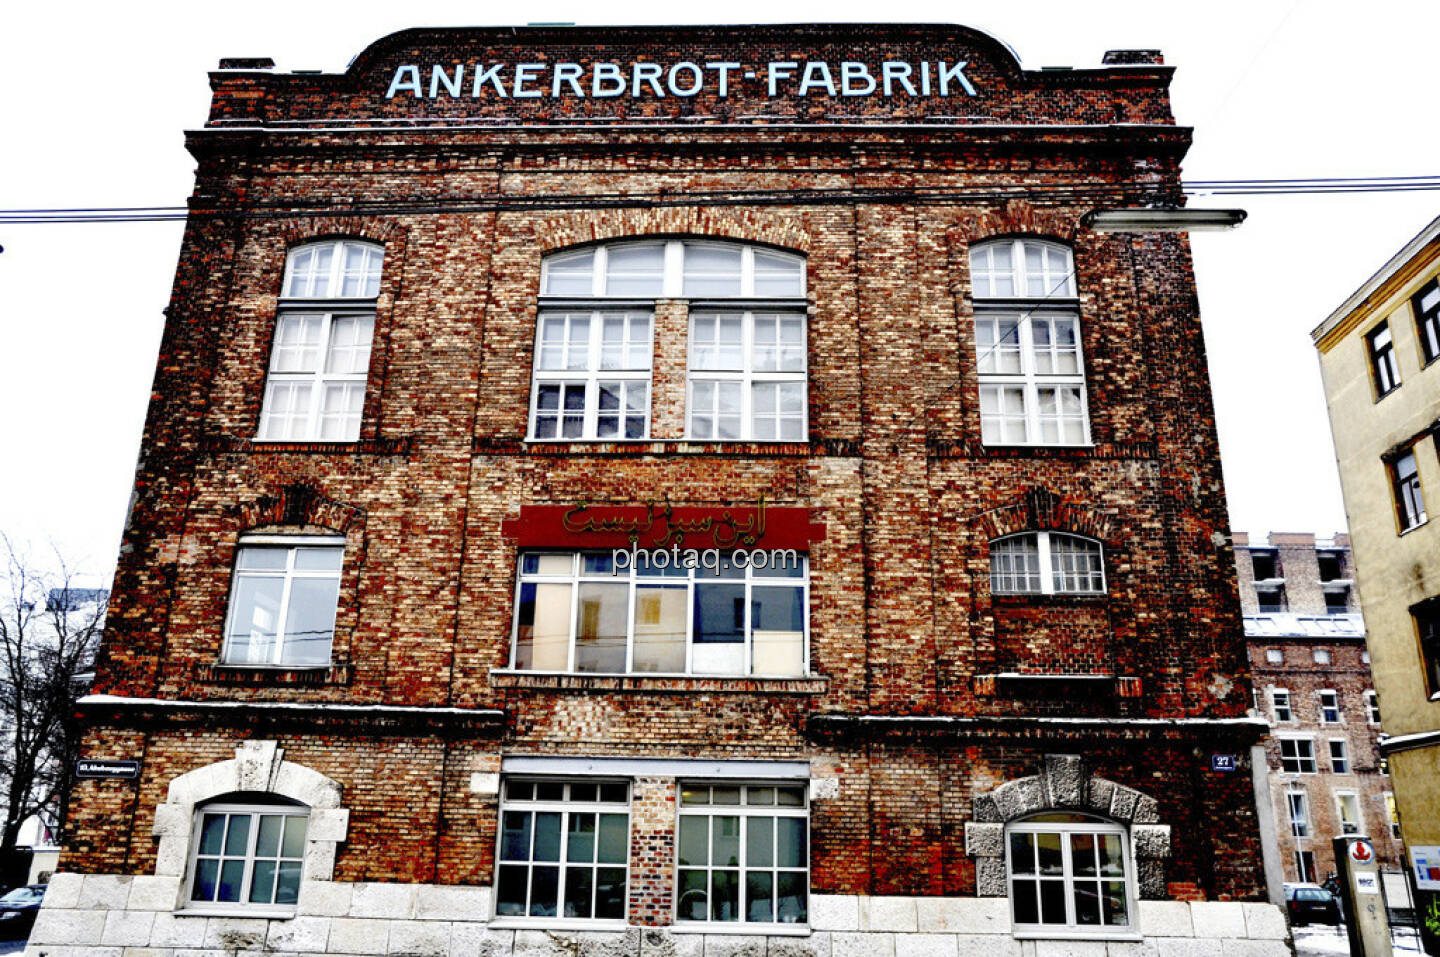 Ankerbrot-Fabrik